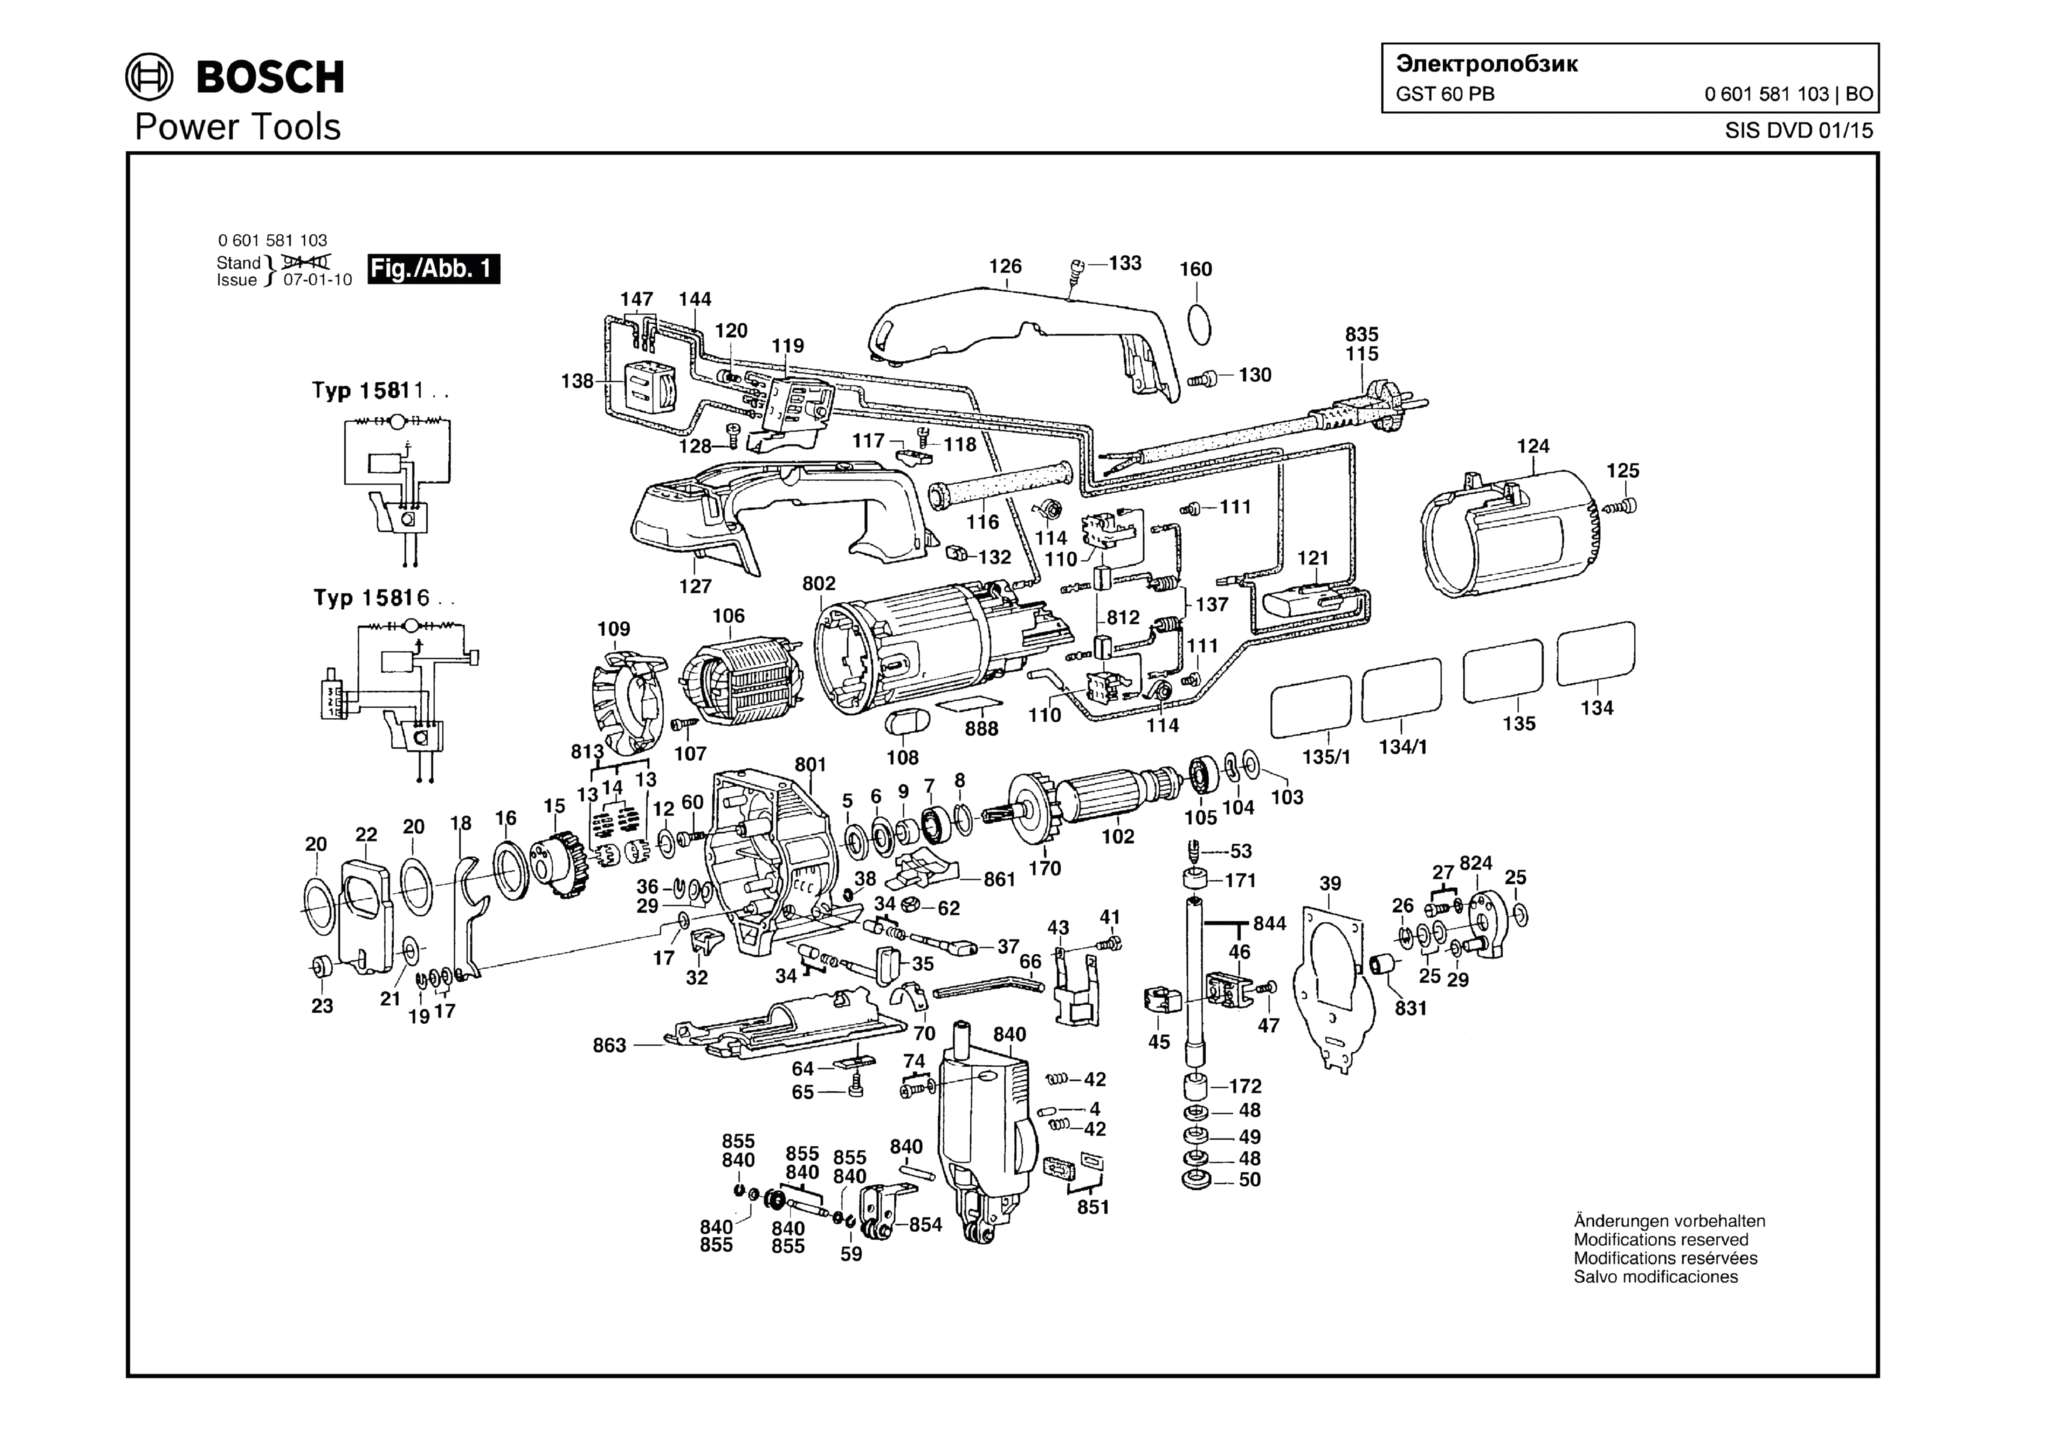 Запчасти, схема и деталировка Bosch GST 60 PB (ТИП 0601581103)